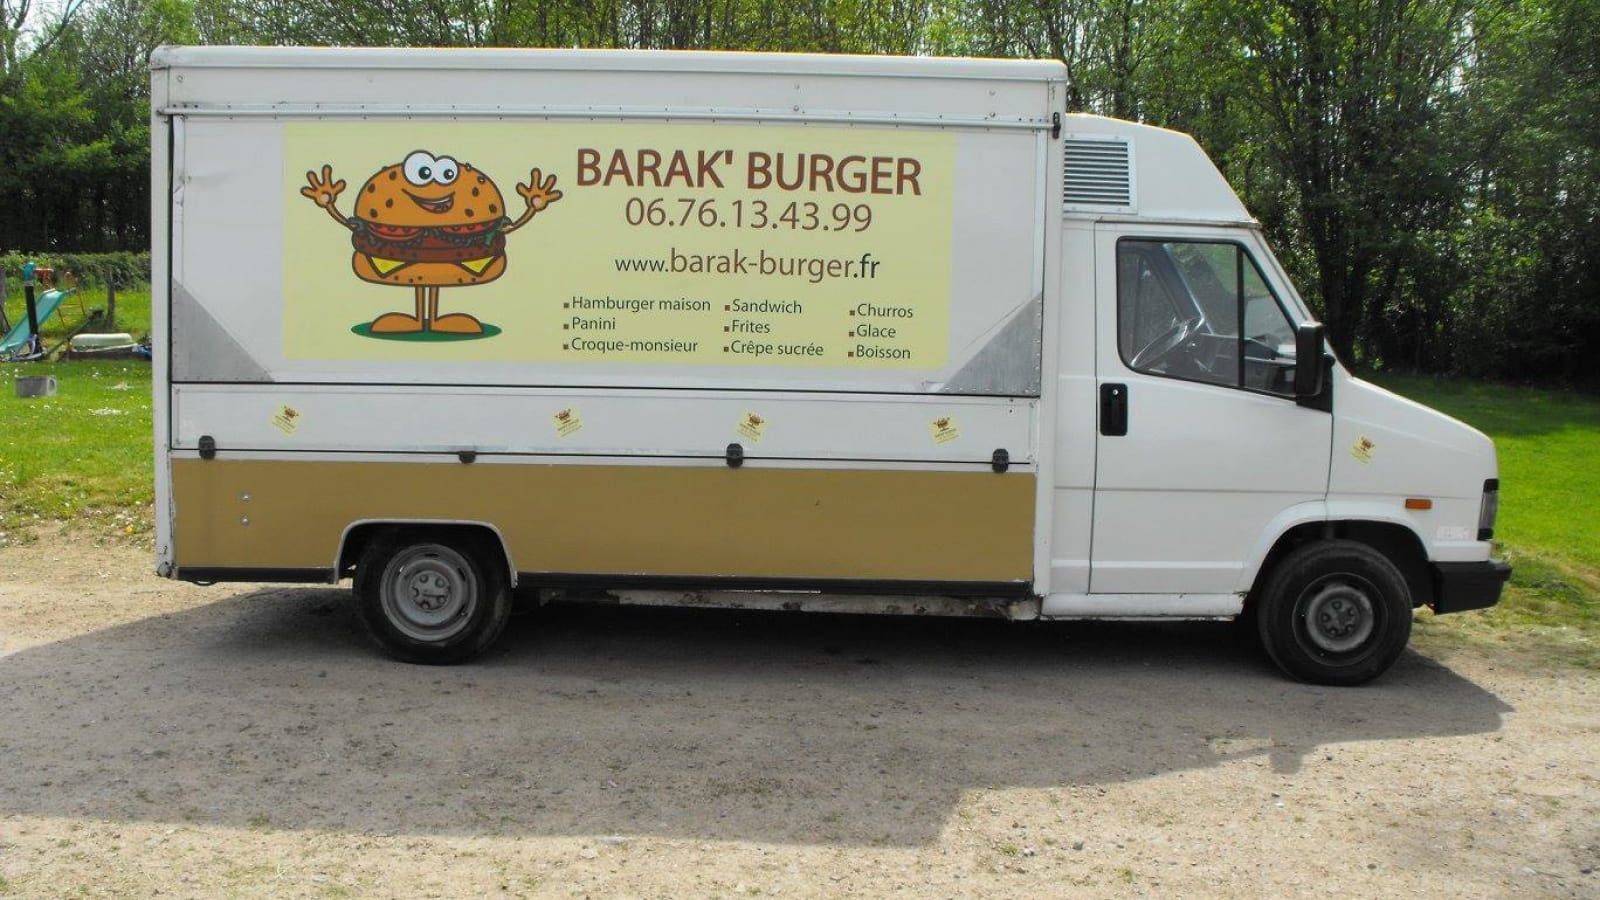 Barak'Burger